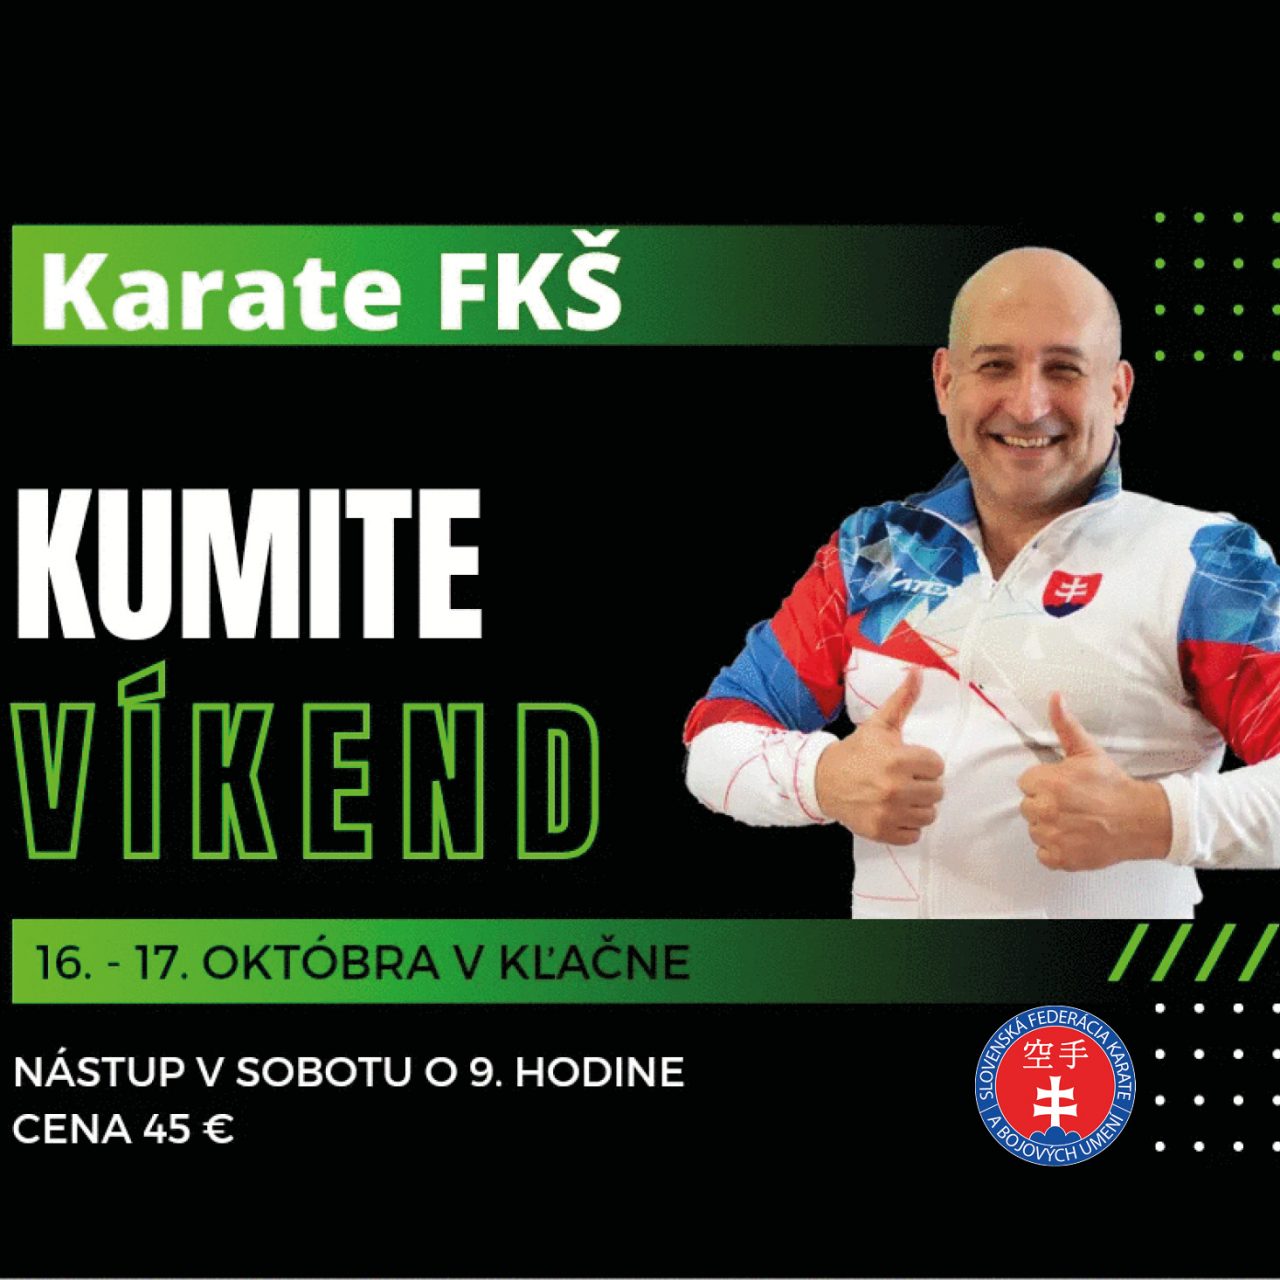 https://karate-slovakia.sk/wp-content/uploads/fb_status-1280x1280.jpg